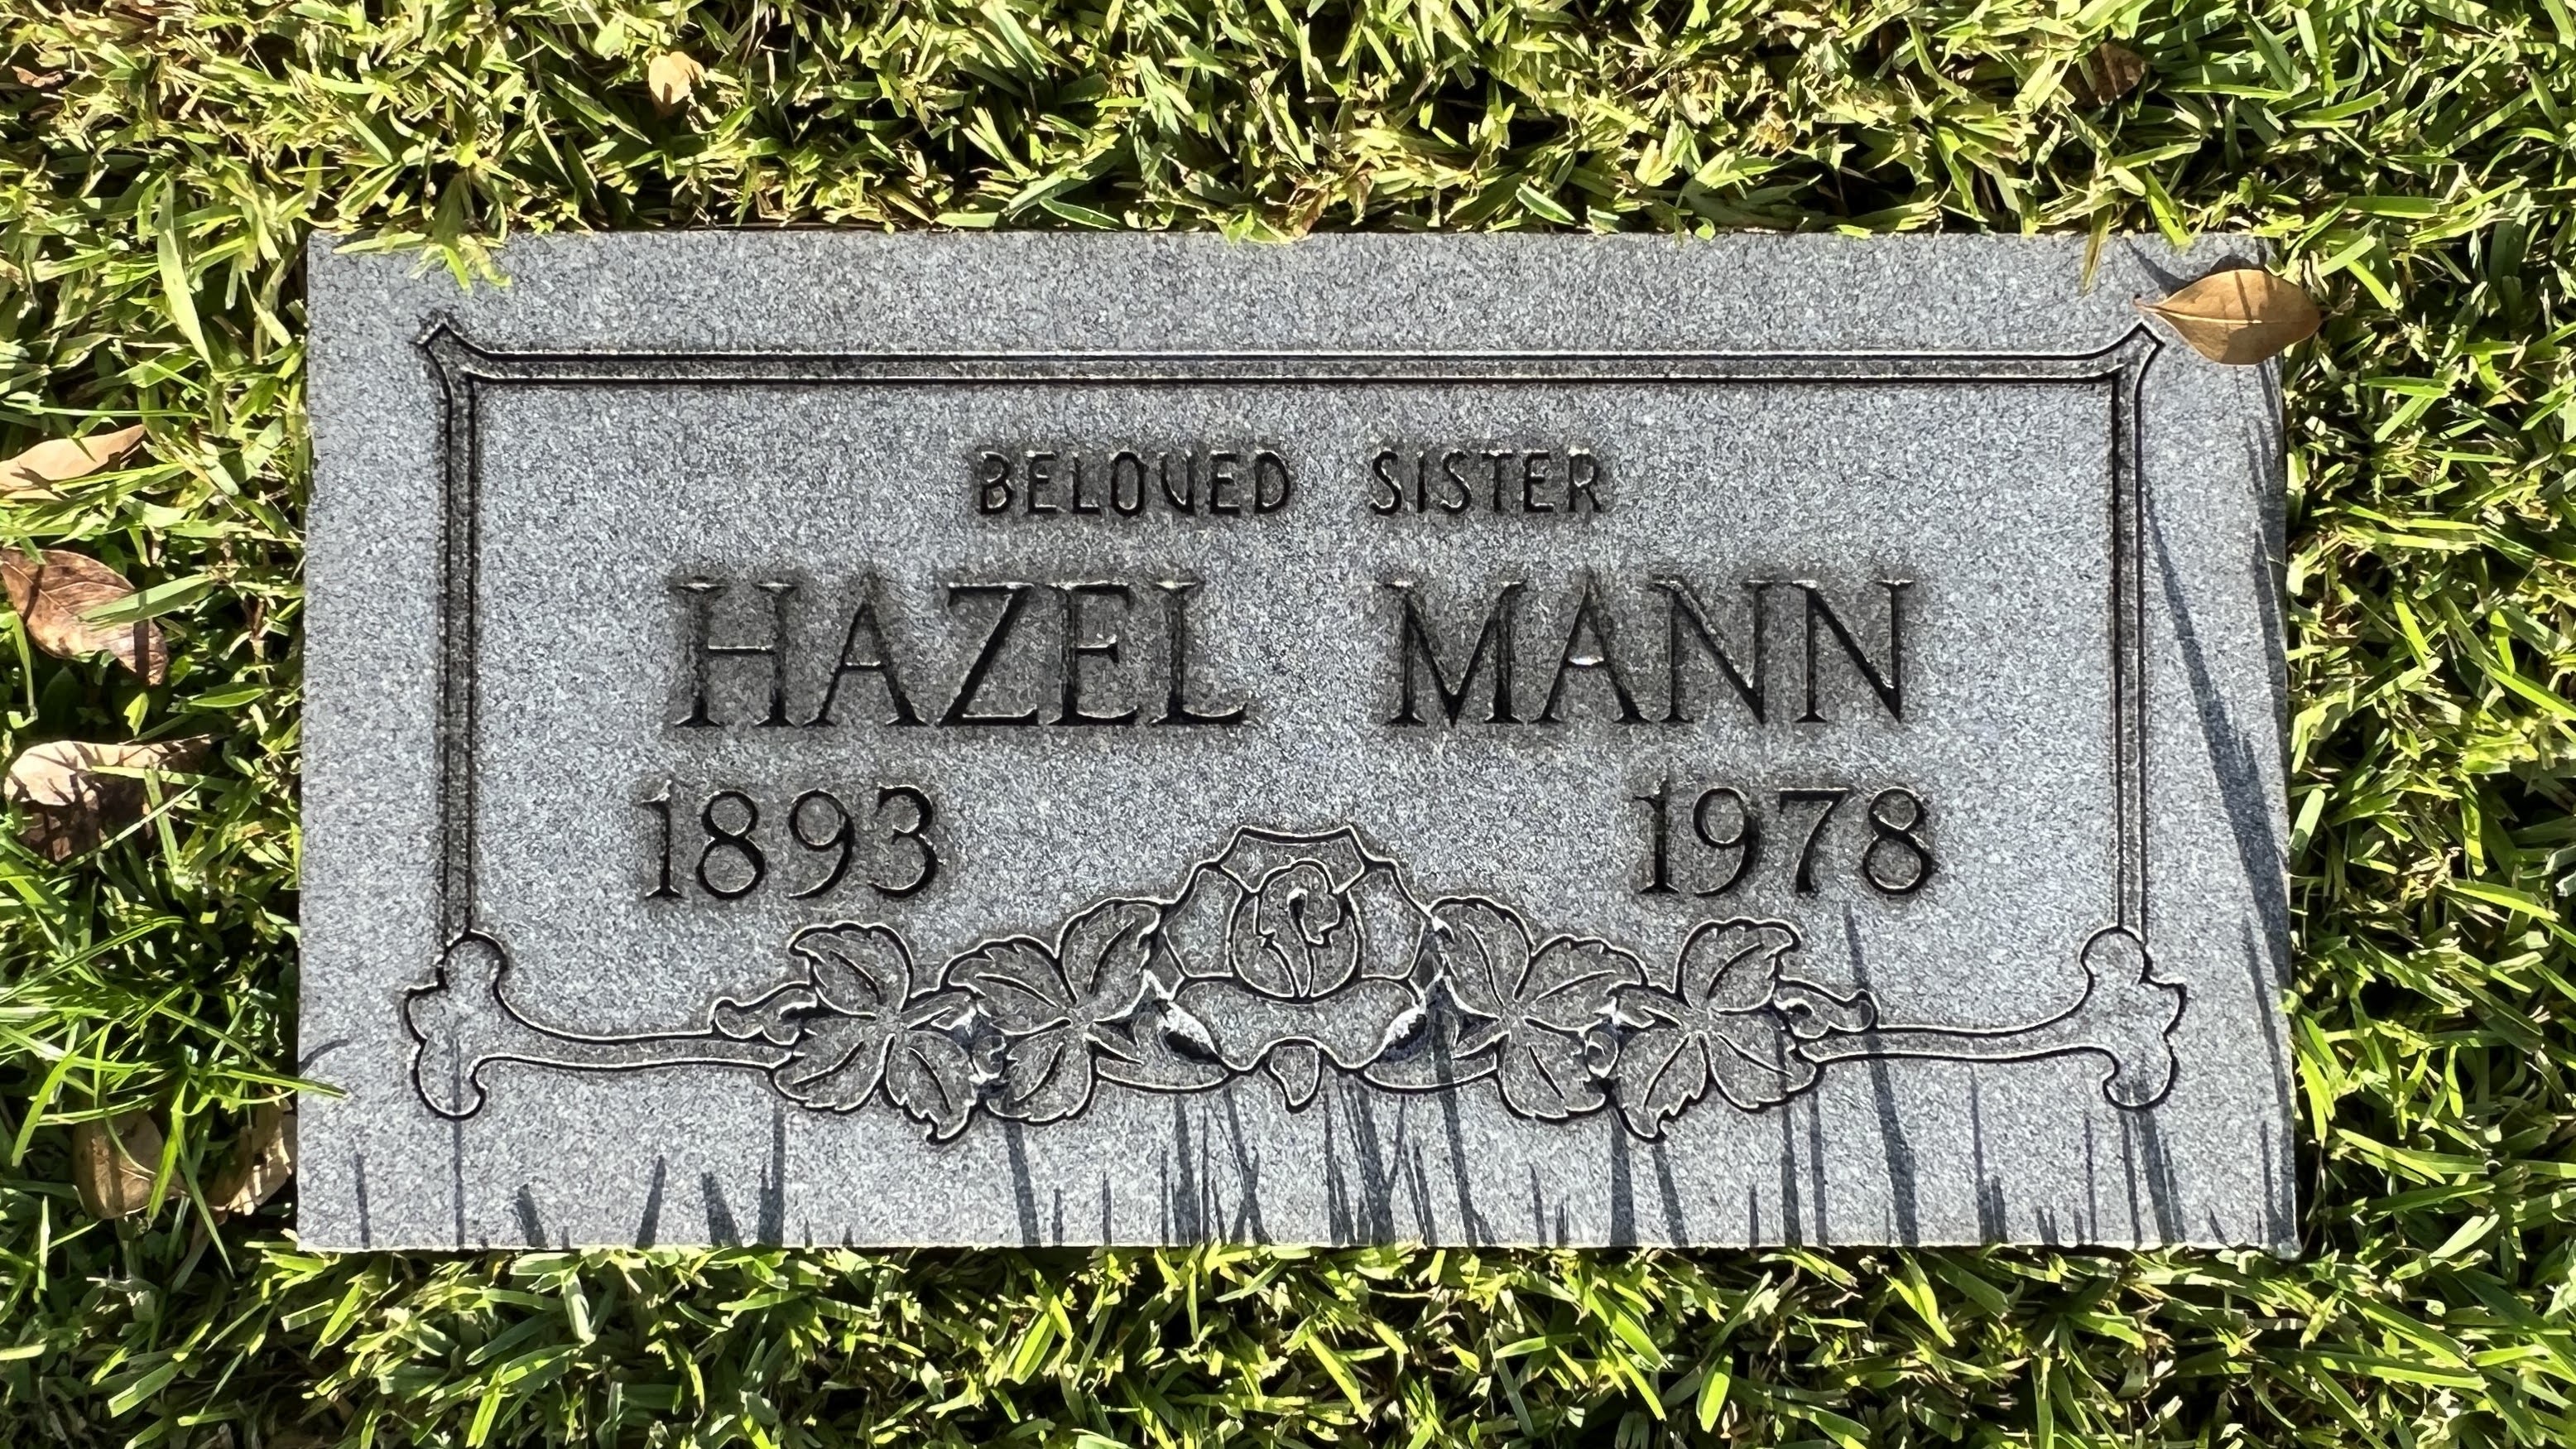 Hazel Mann